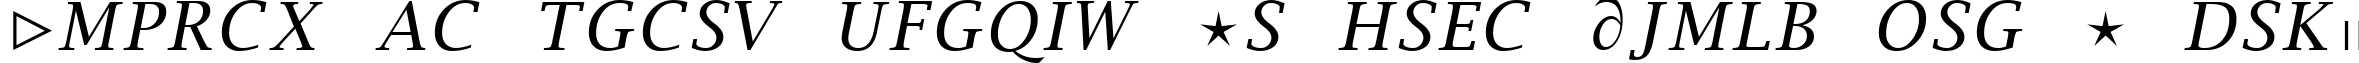 Пример написания шрифтом Lucida Bright Math Italic текста на французском